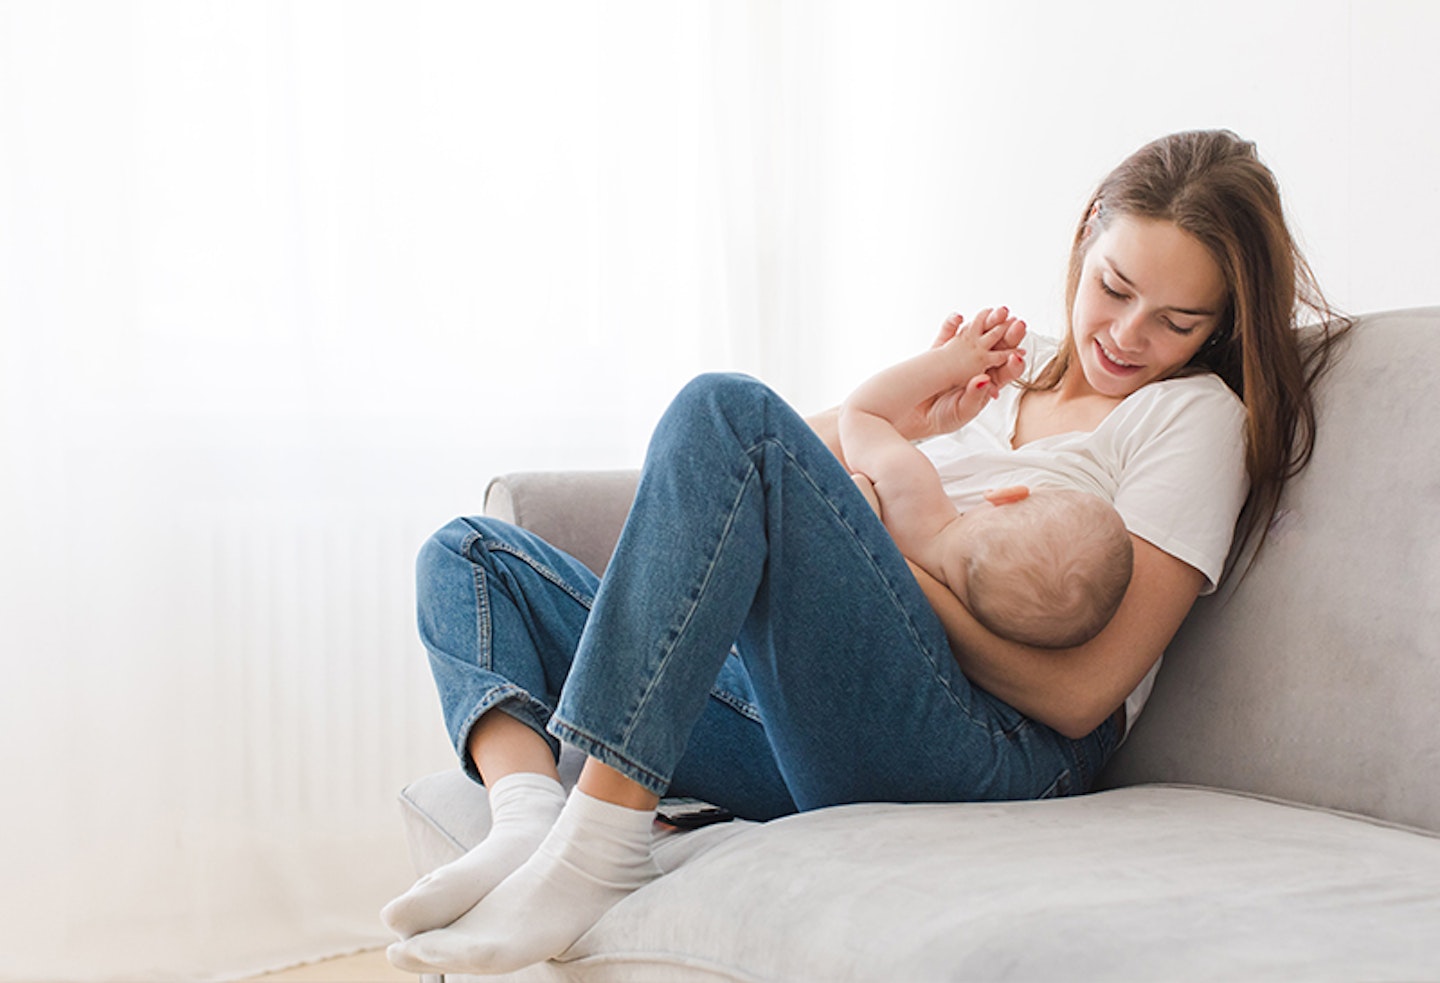 Breastfeeding Essentials: The New Mom's Complete Checklist to Make